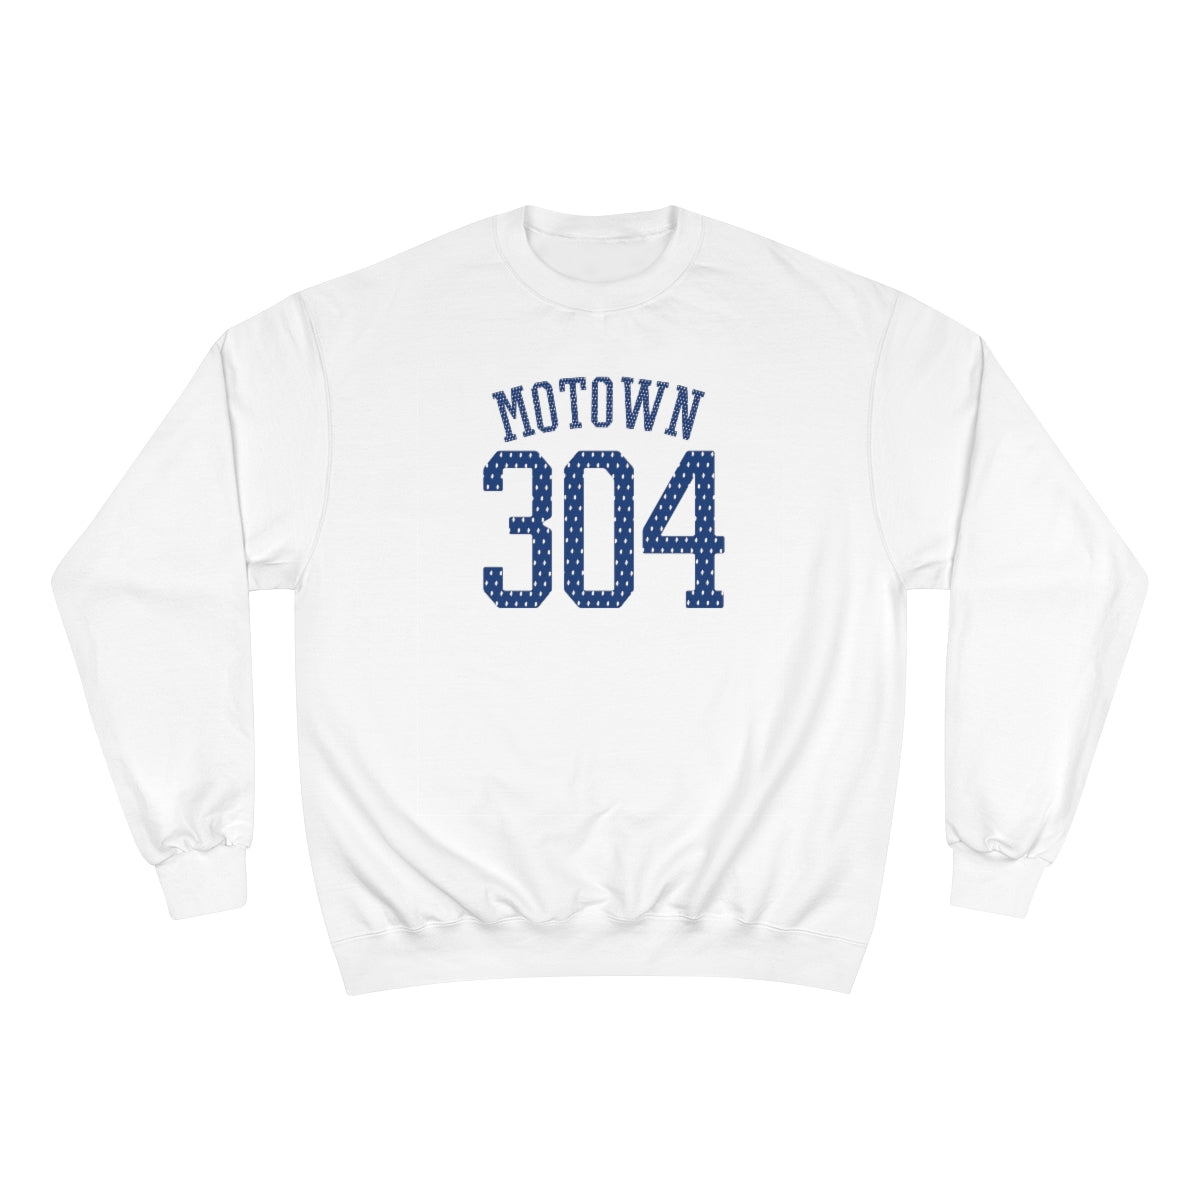 MOTOWN arched_304 (mesh typography)-Champion Sweatshirt